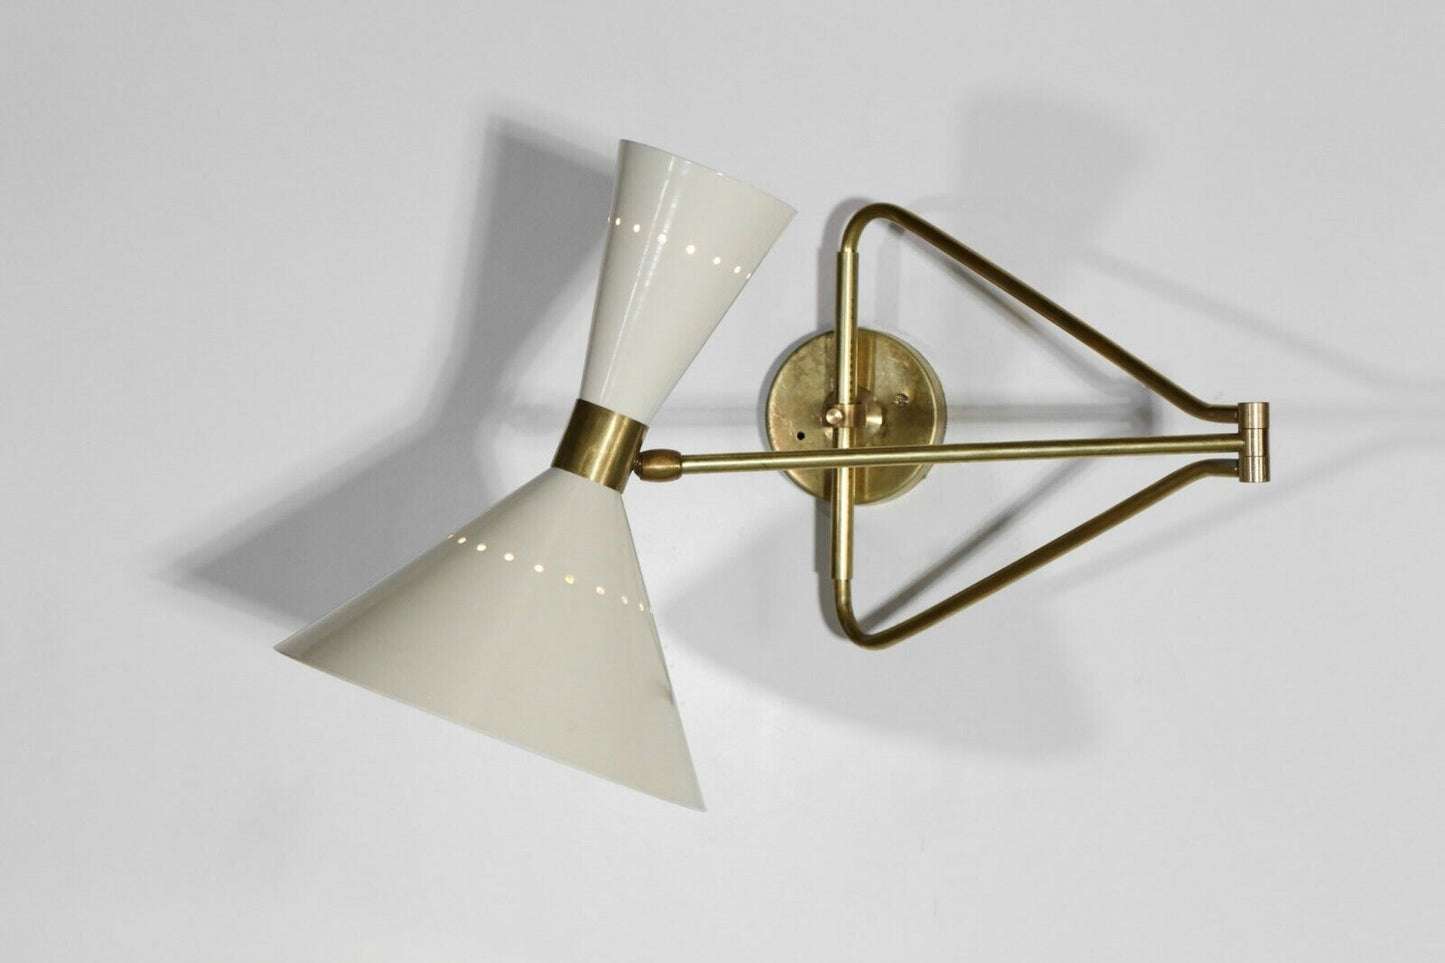 Italian Adjustable Wall Light Diabolo Modern Brass Wall Fixture Sconce 2 Bulbs